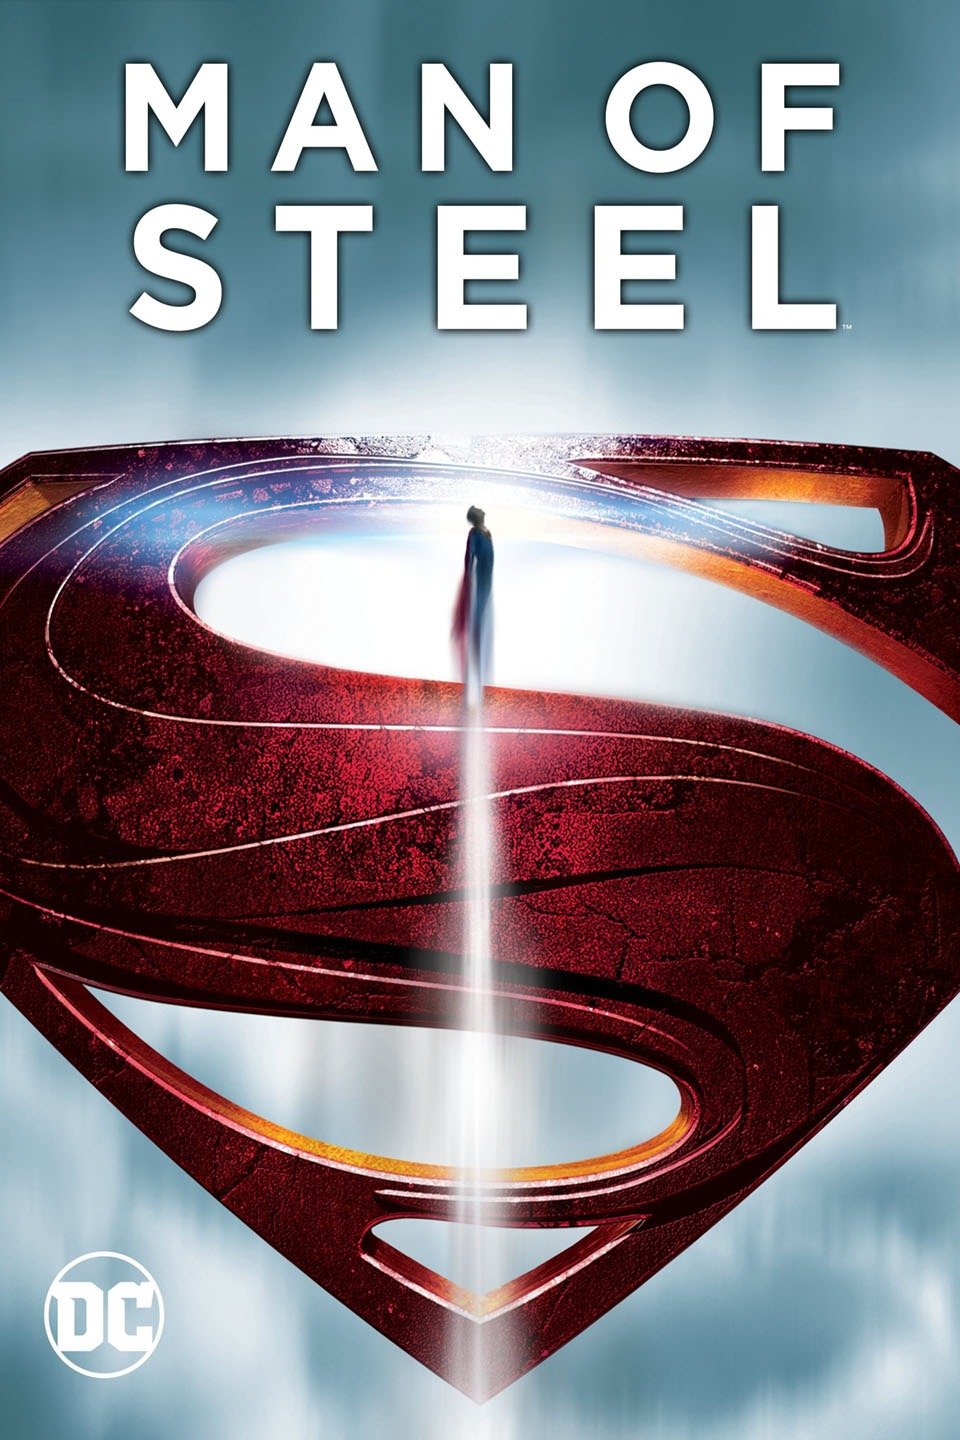 [MINI Super-HQ] Man of Steel (2013) บุรุษเหล็กซูเปอร์แมน [1080p] [พากย์ไทย DTS + อังกฤษ DTS] [บรรยายไทย + อังกฤษ] [เสียงไทย + ซับไทย] [ONE2UP]